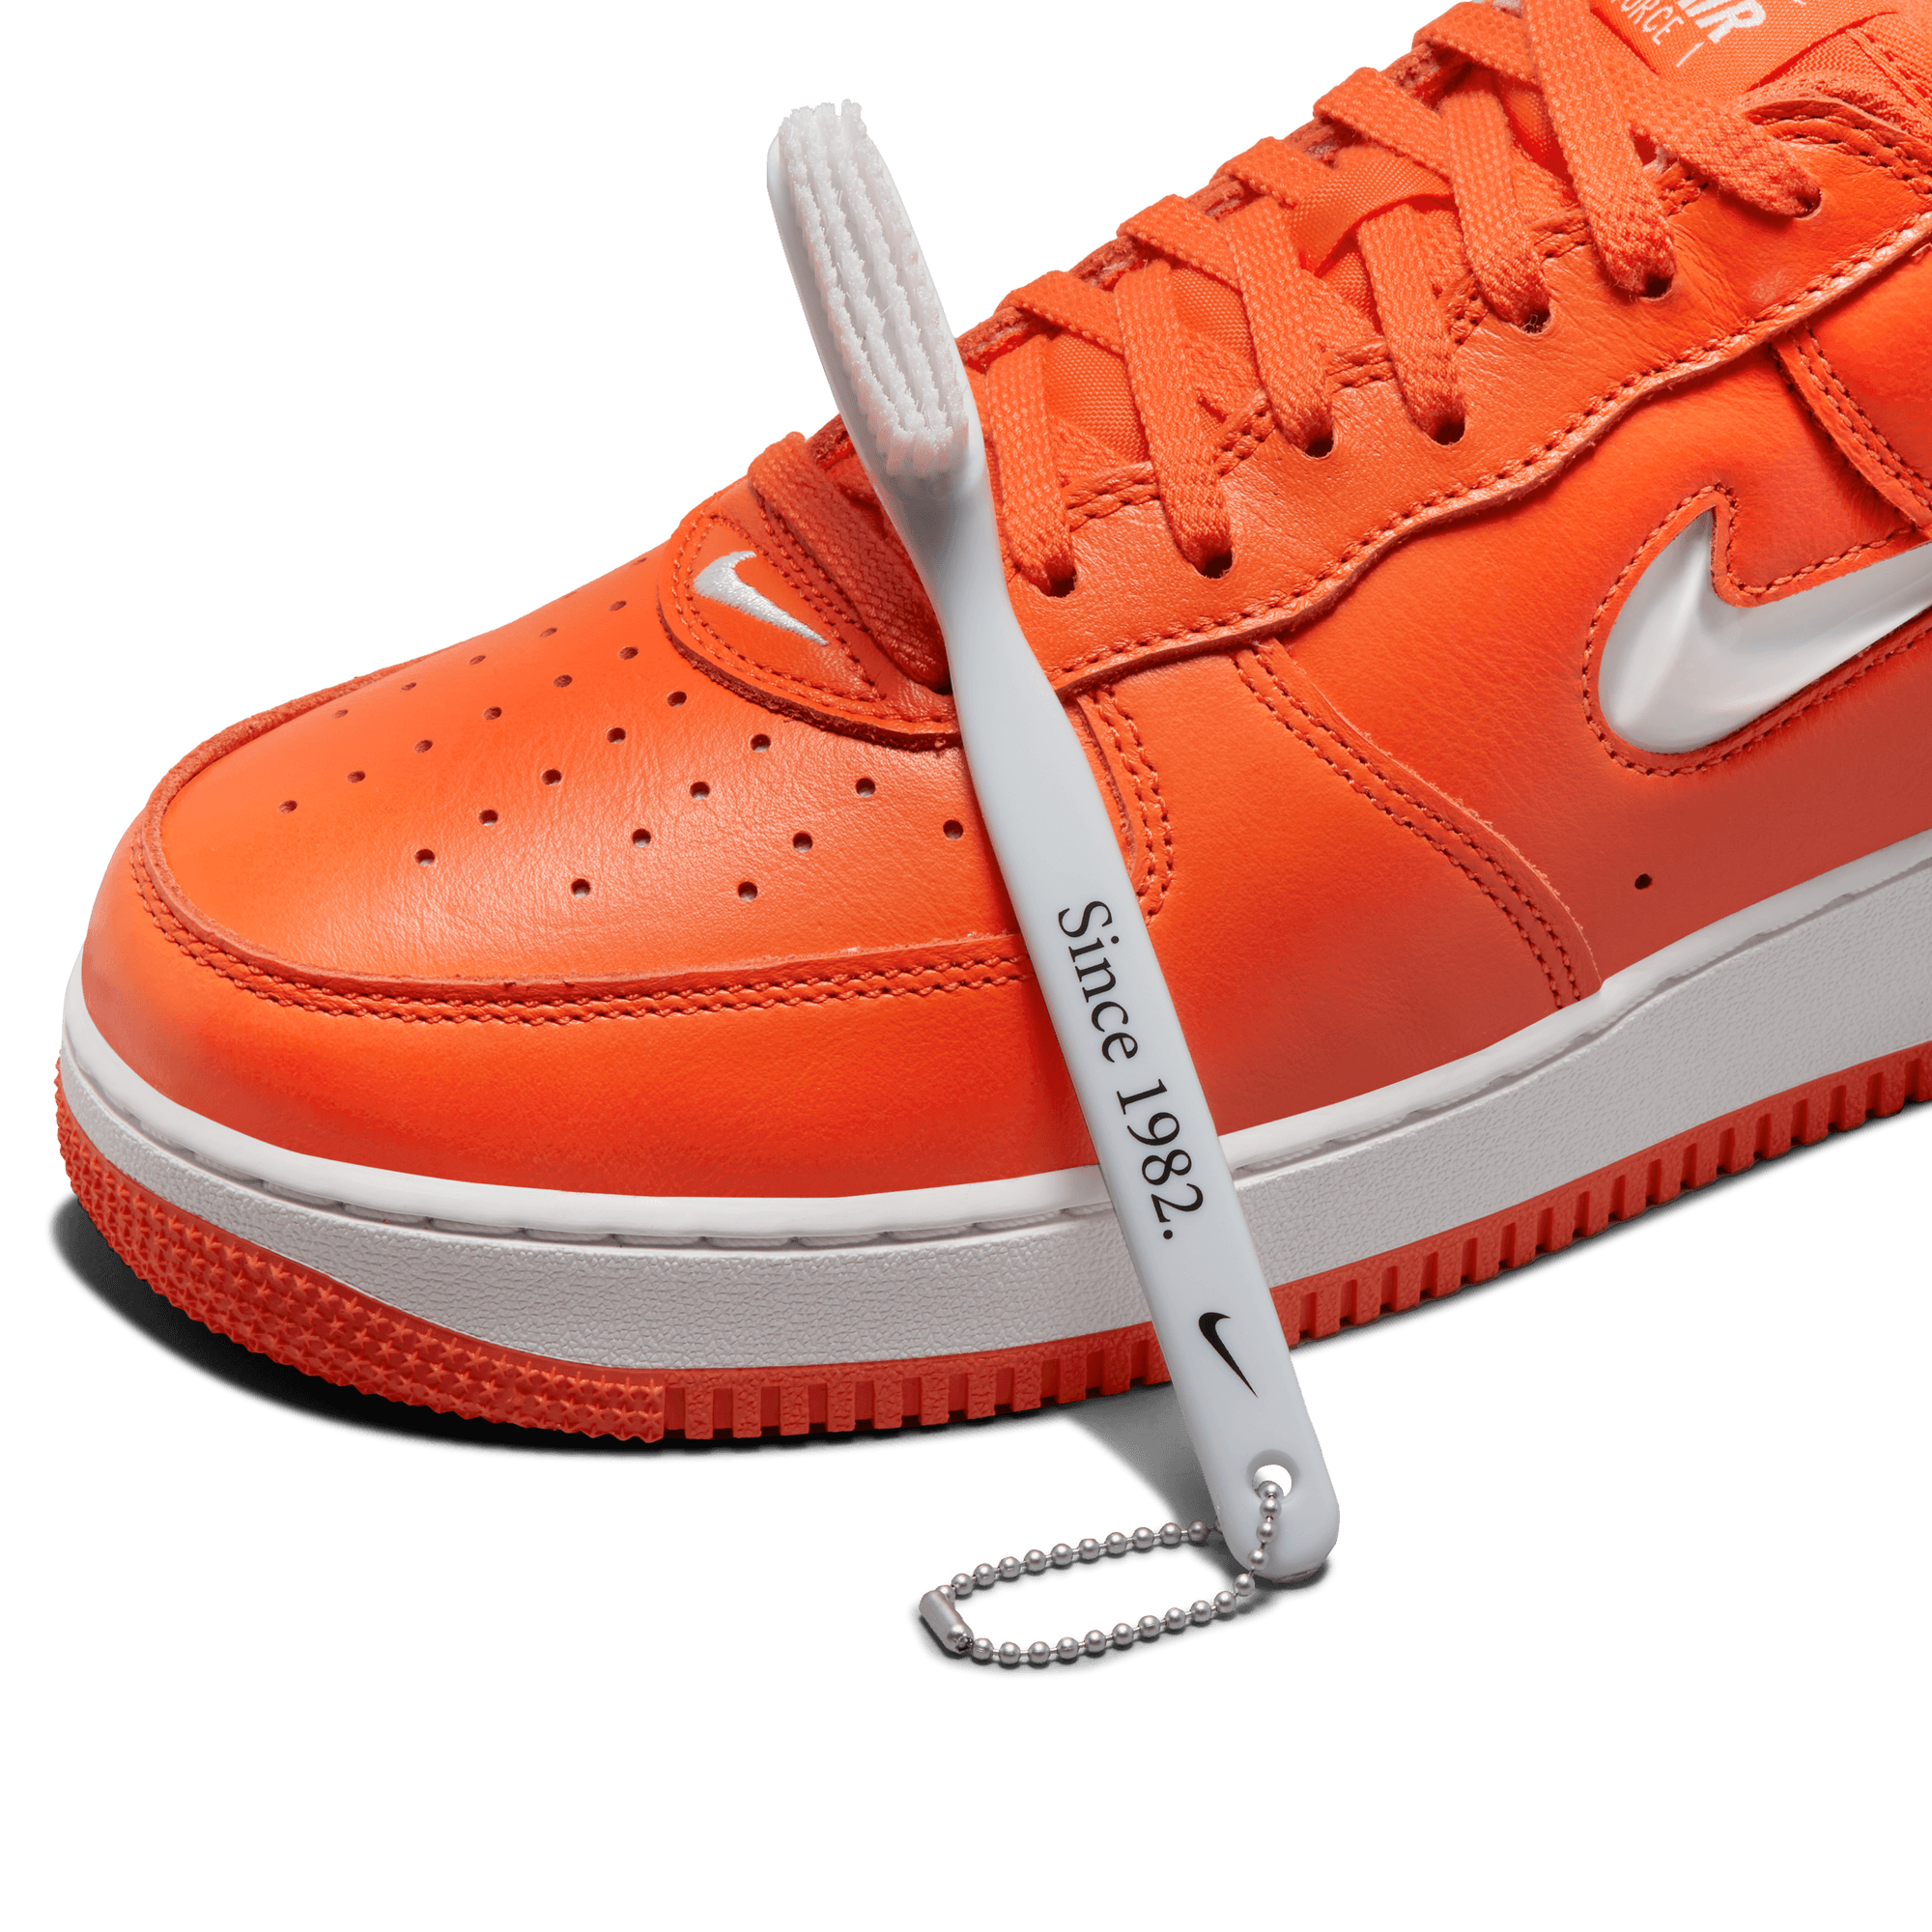 Nike cursor – Custom Cursor